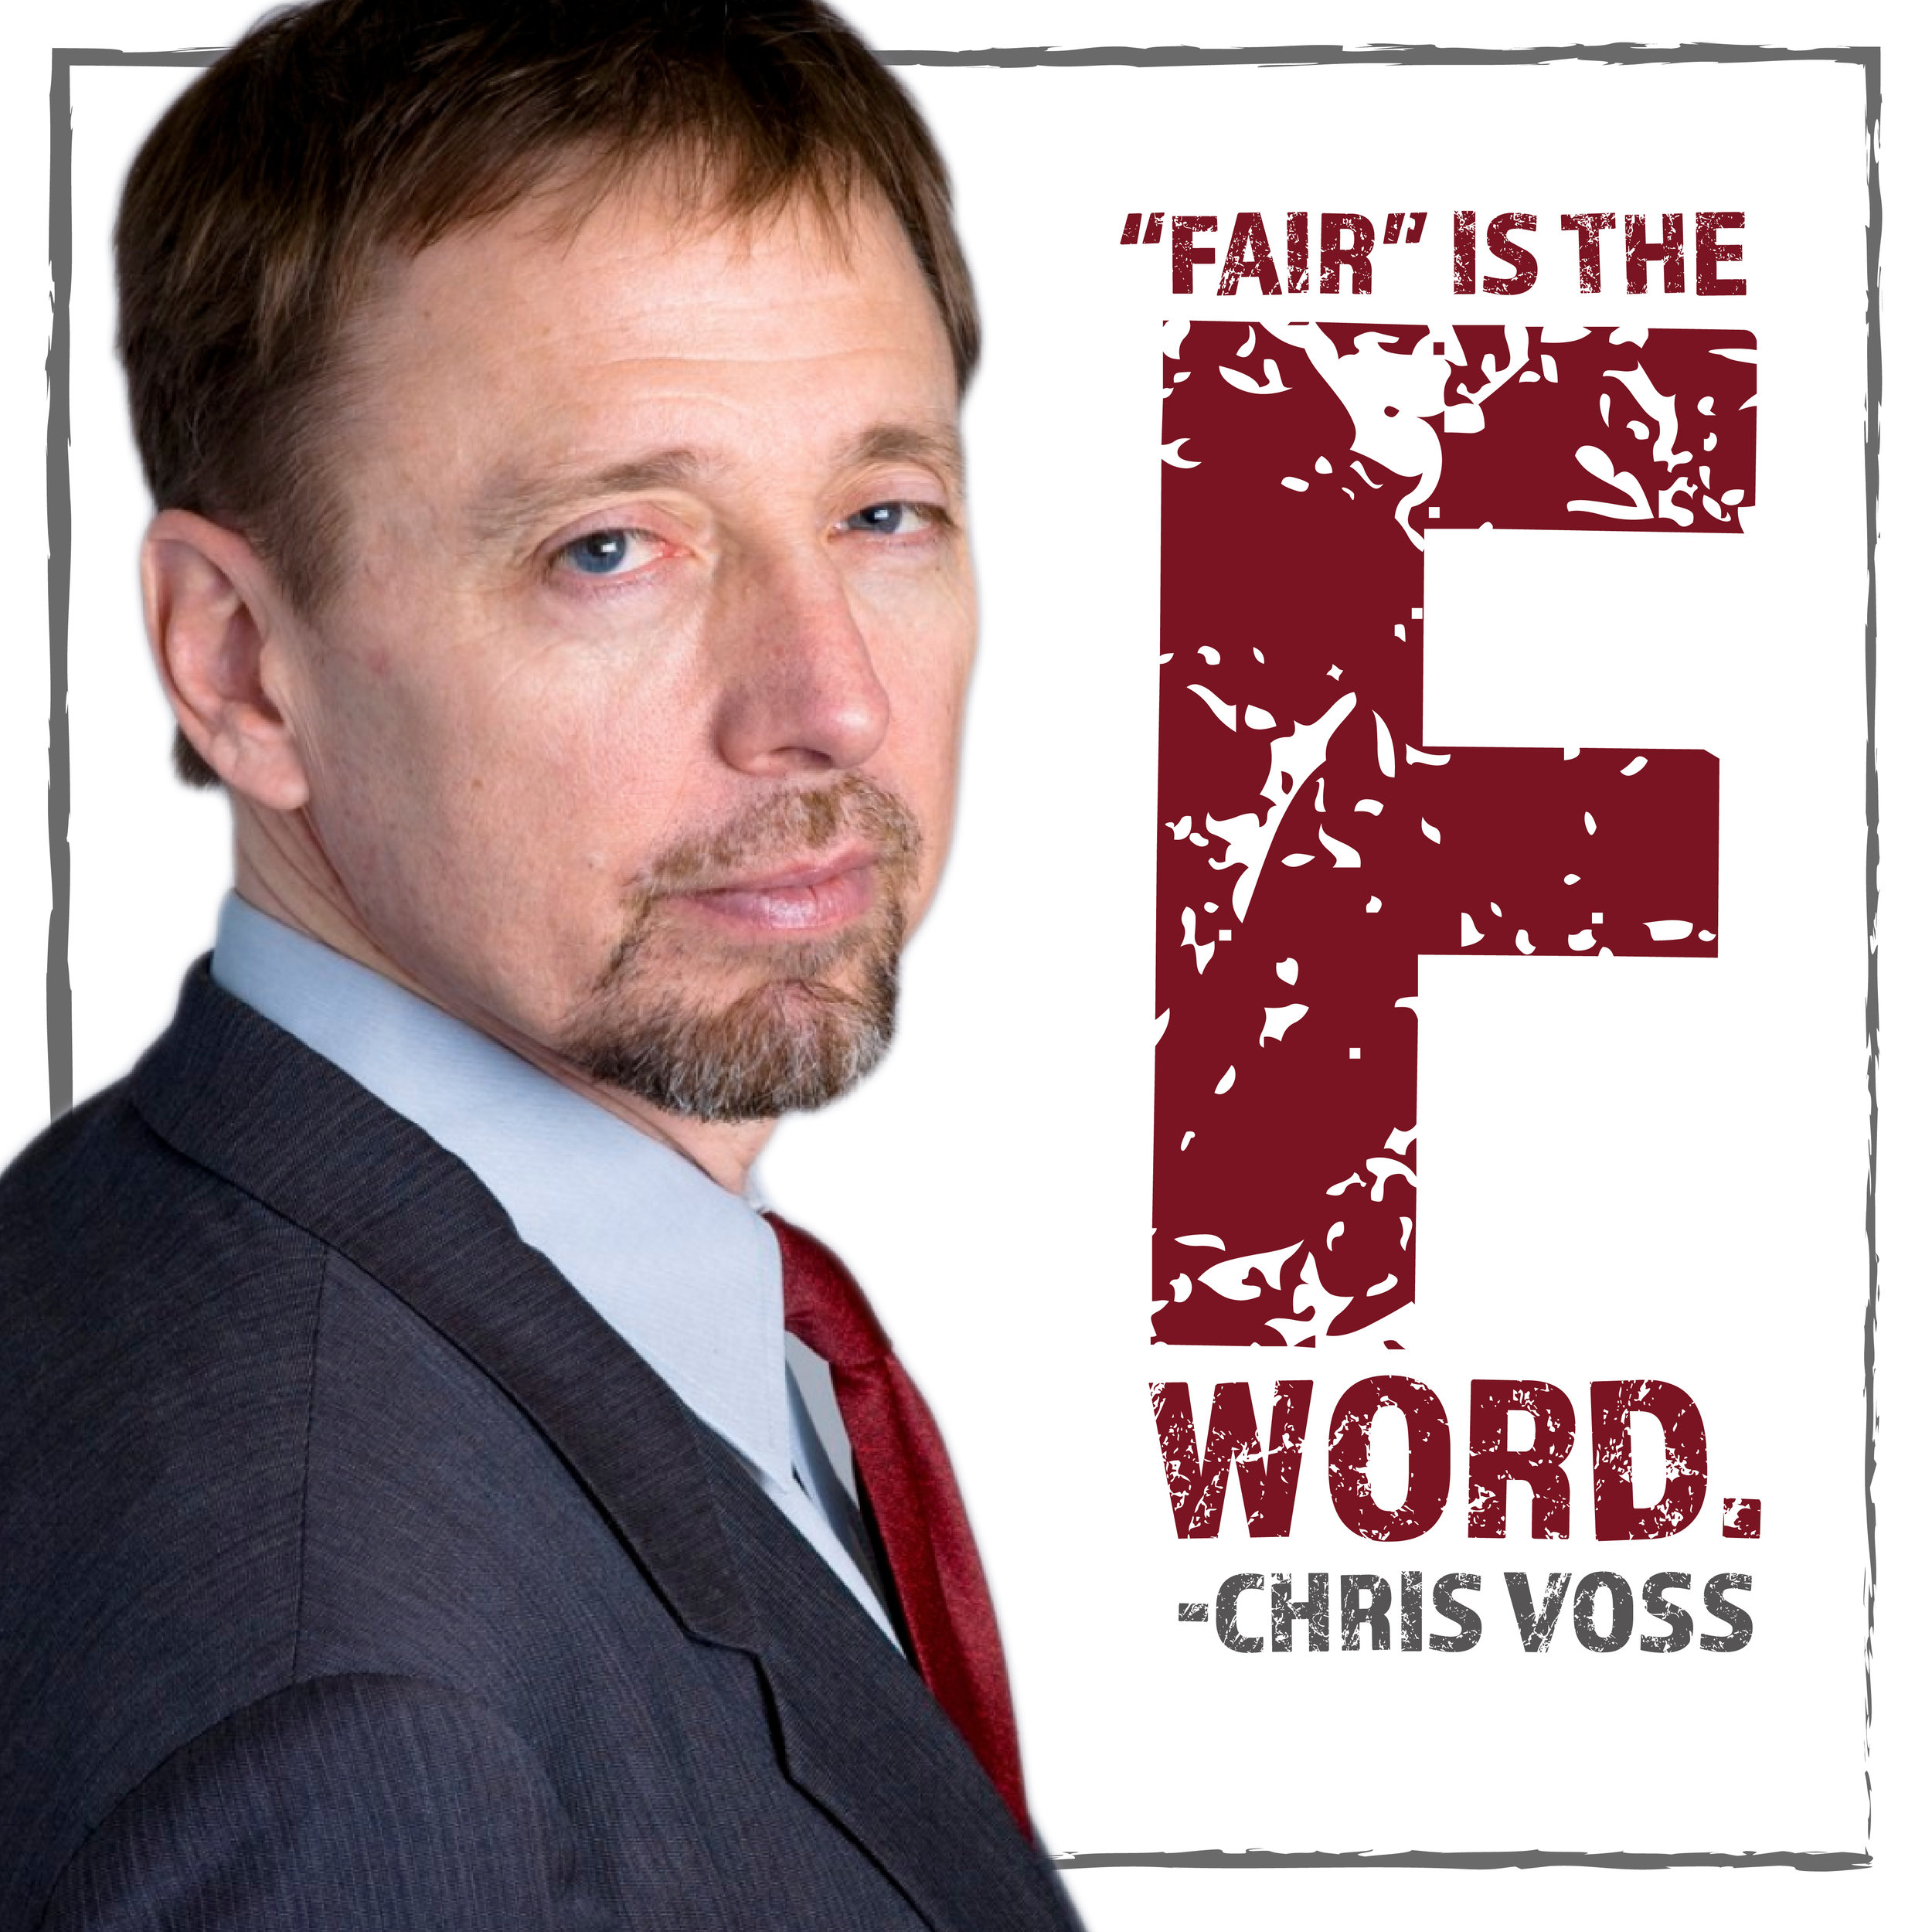 Summary] Chris Voss: FBI Hostage Negotiator